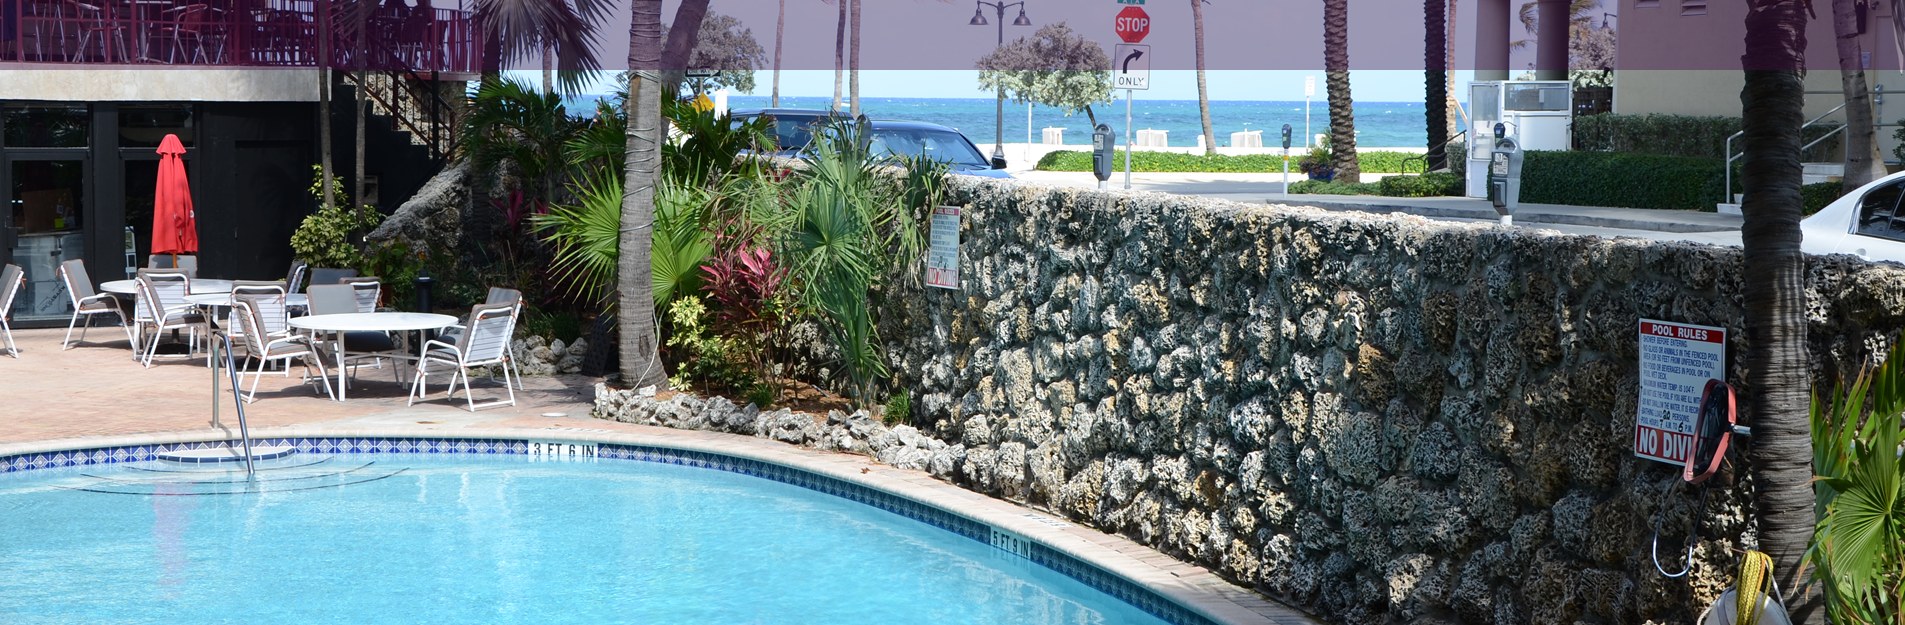 Seaclub Resort Pool and Ocean View